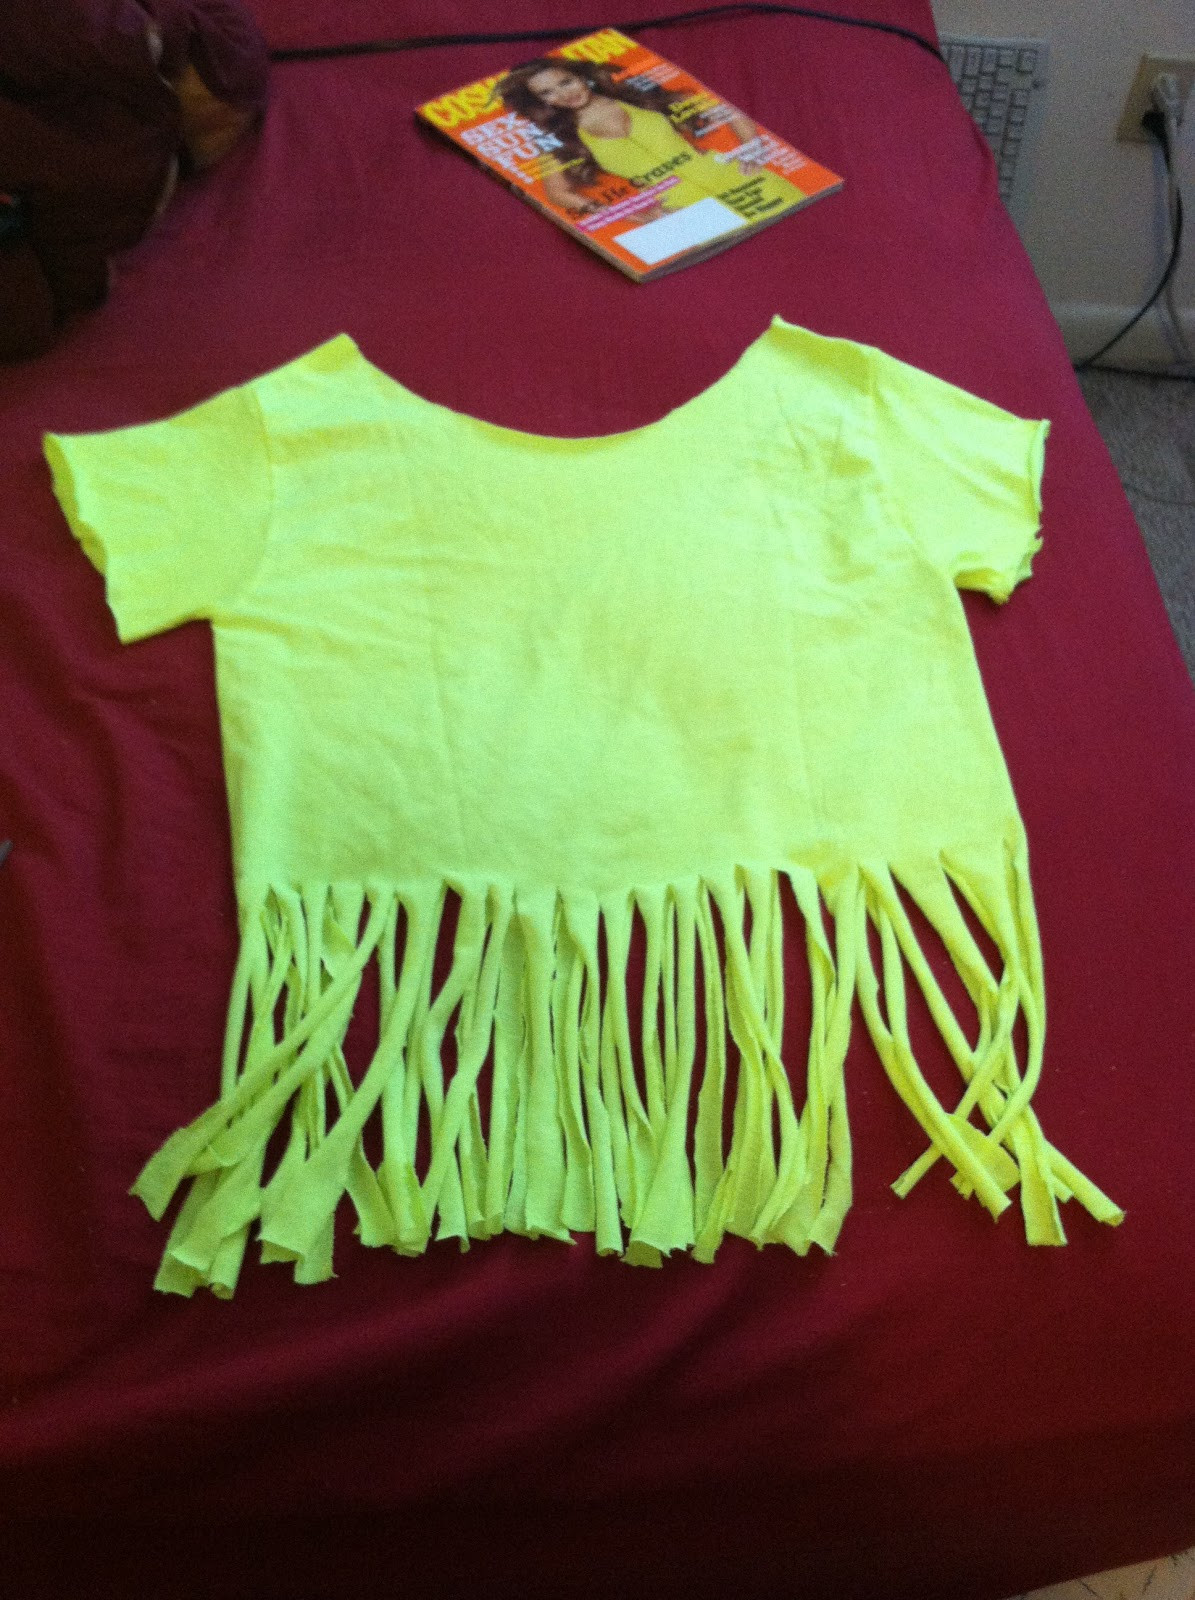 Best ideas about DIY Fringe Shirt
. Save or Pin waves of sunshine DIY Fringe Shirt Now.